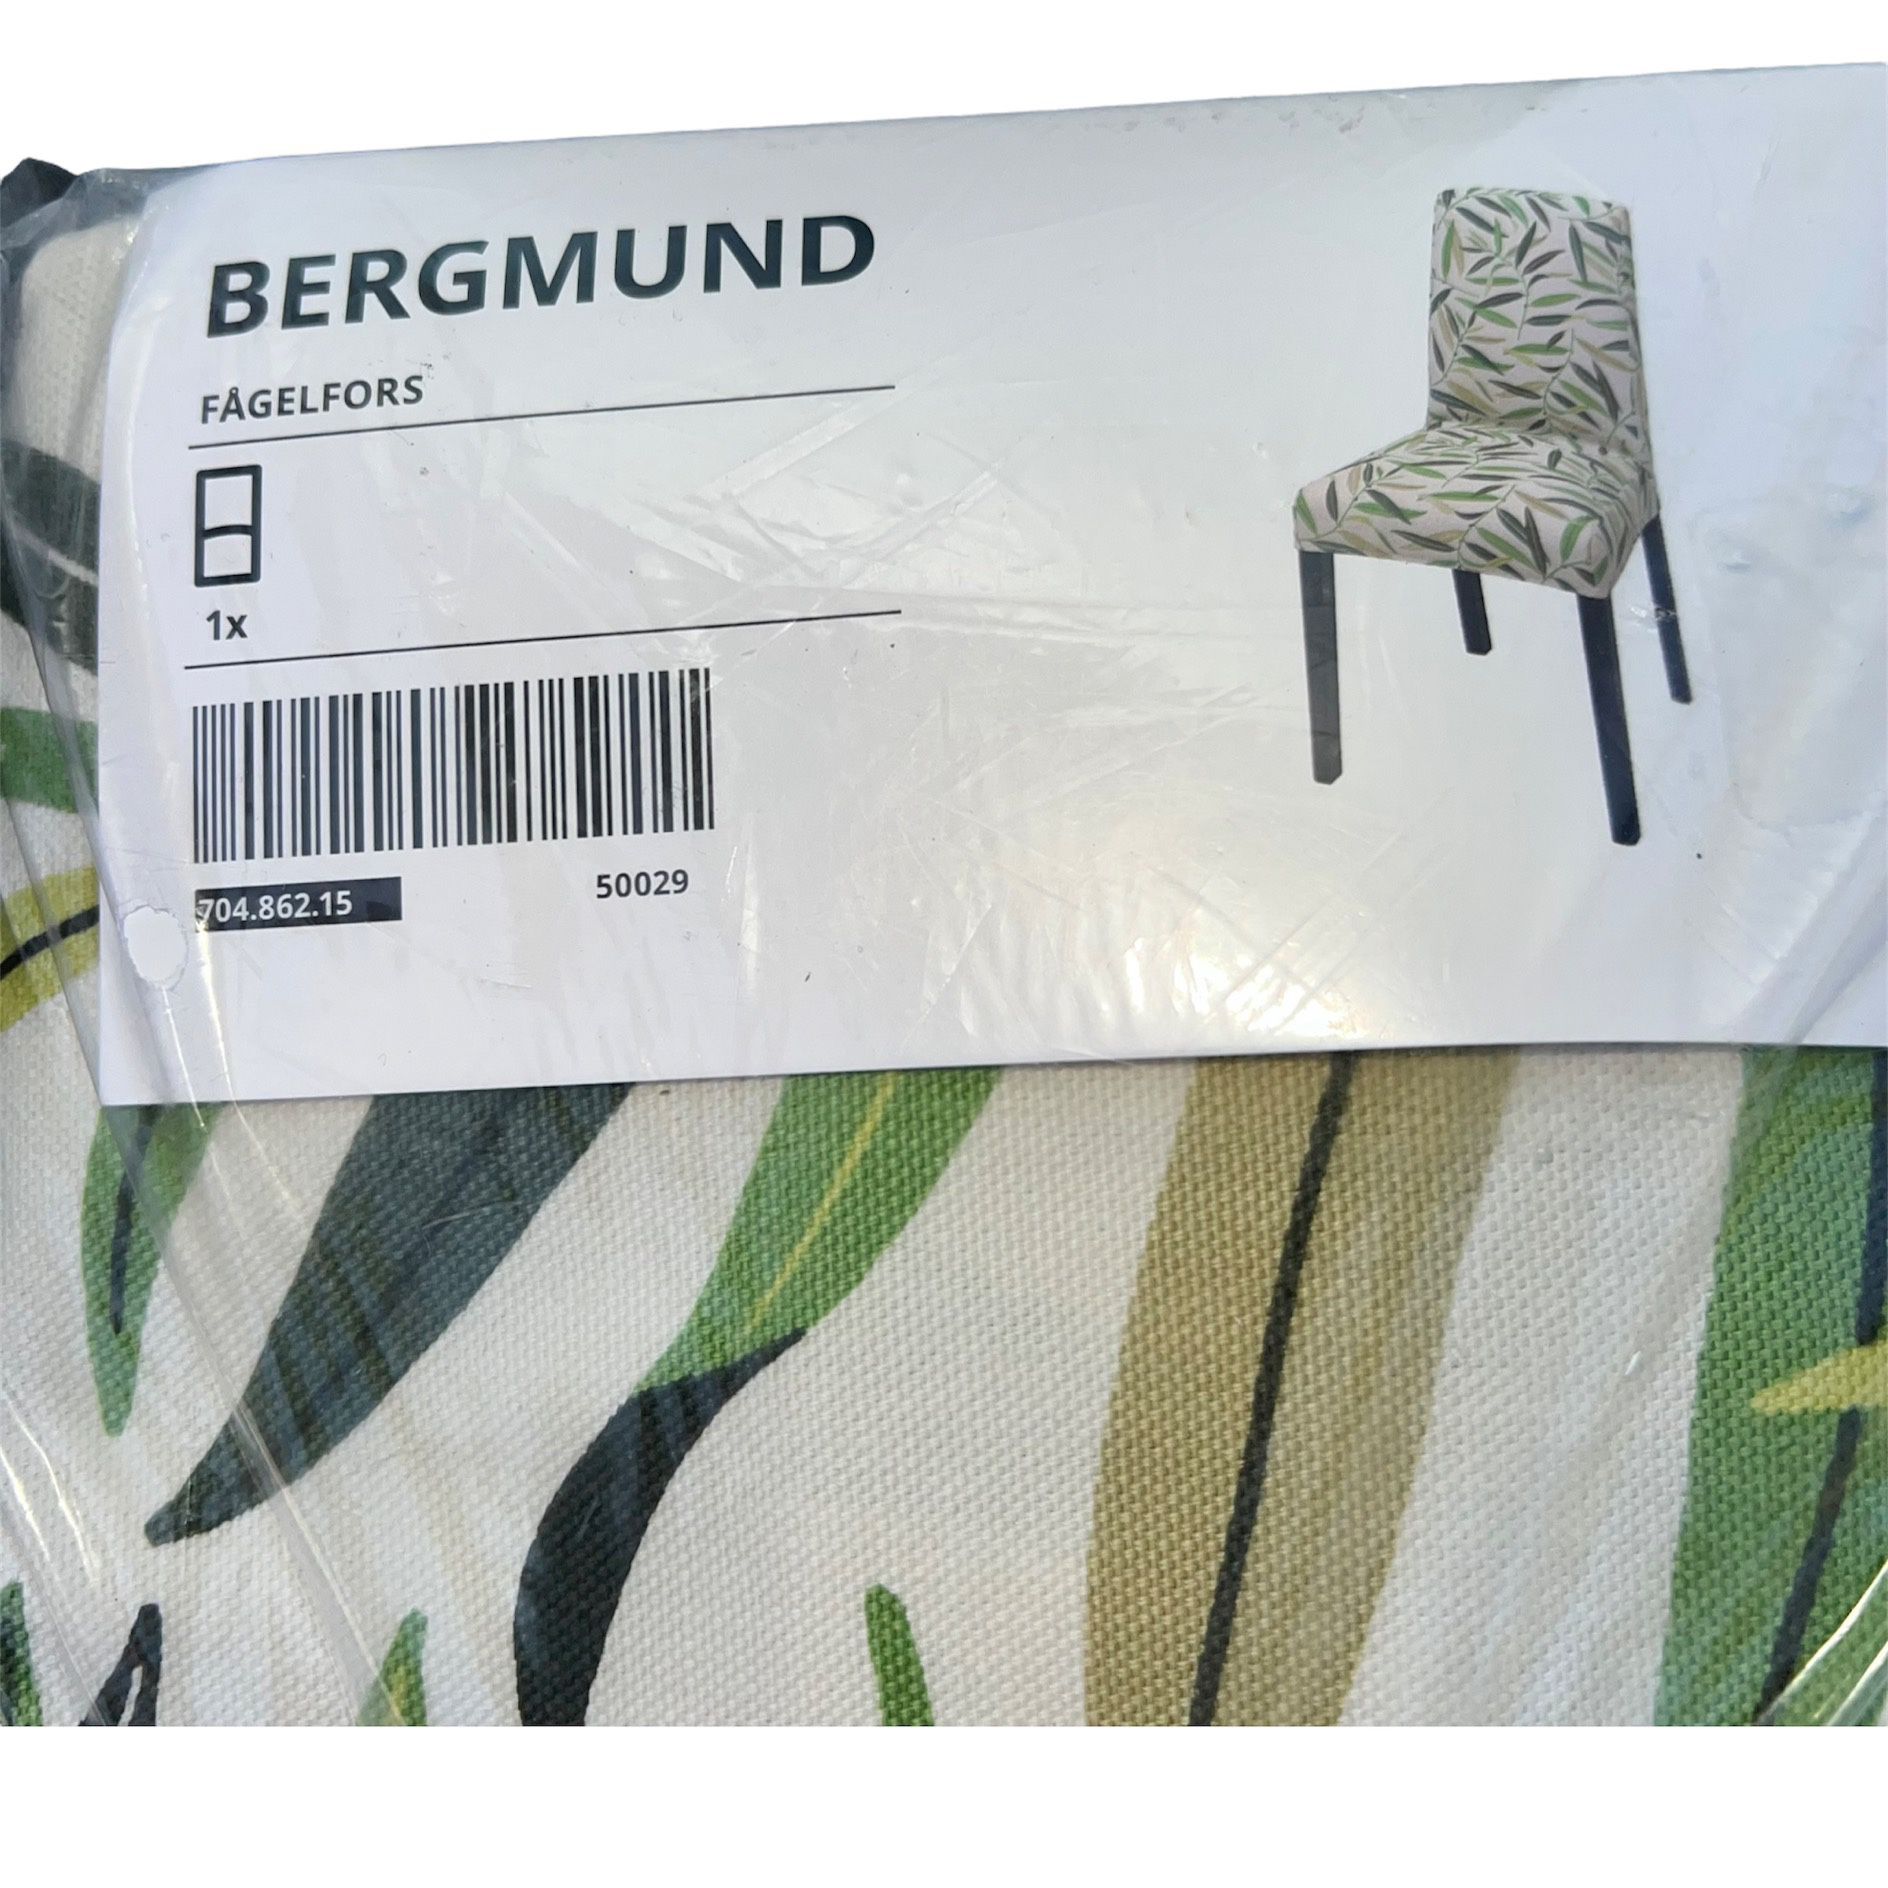 IKEA BERGMUND Fågelfors Chair Cover Multicolor 704.862.15 New